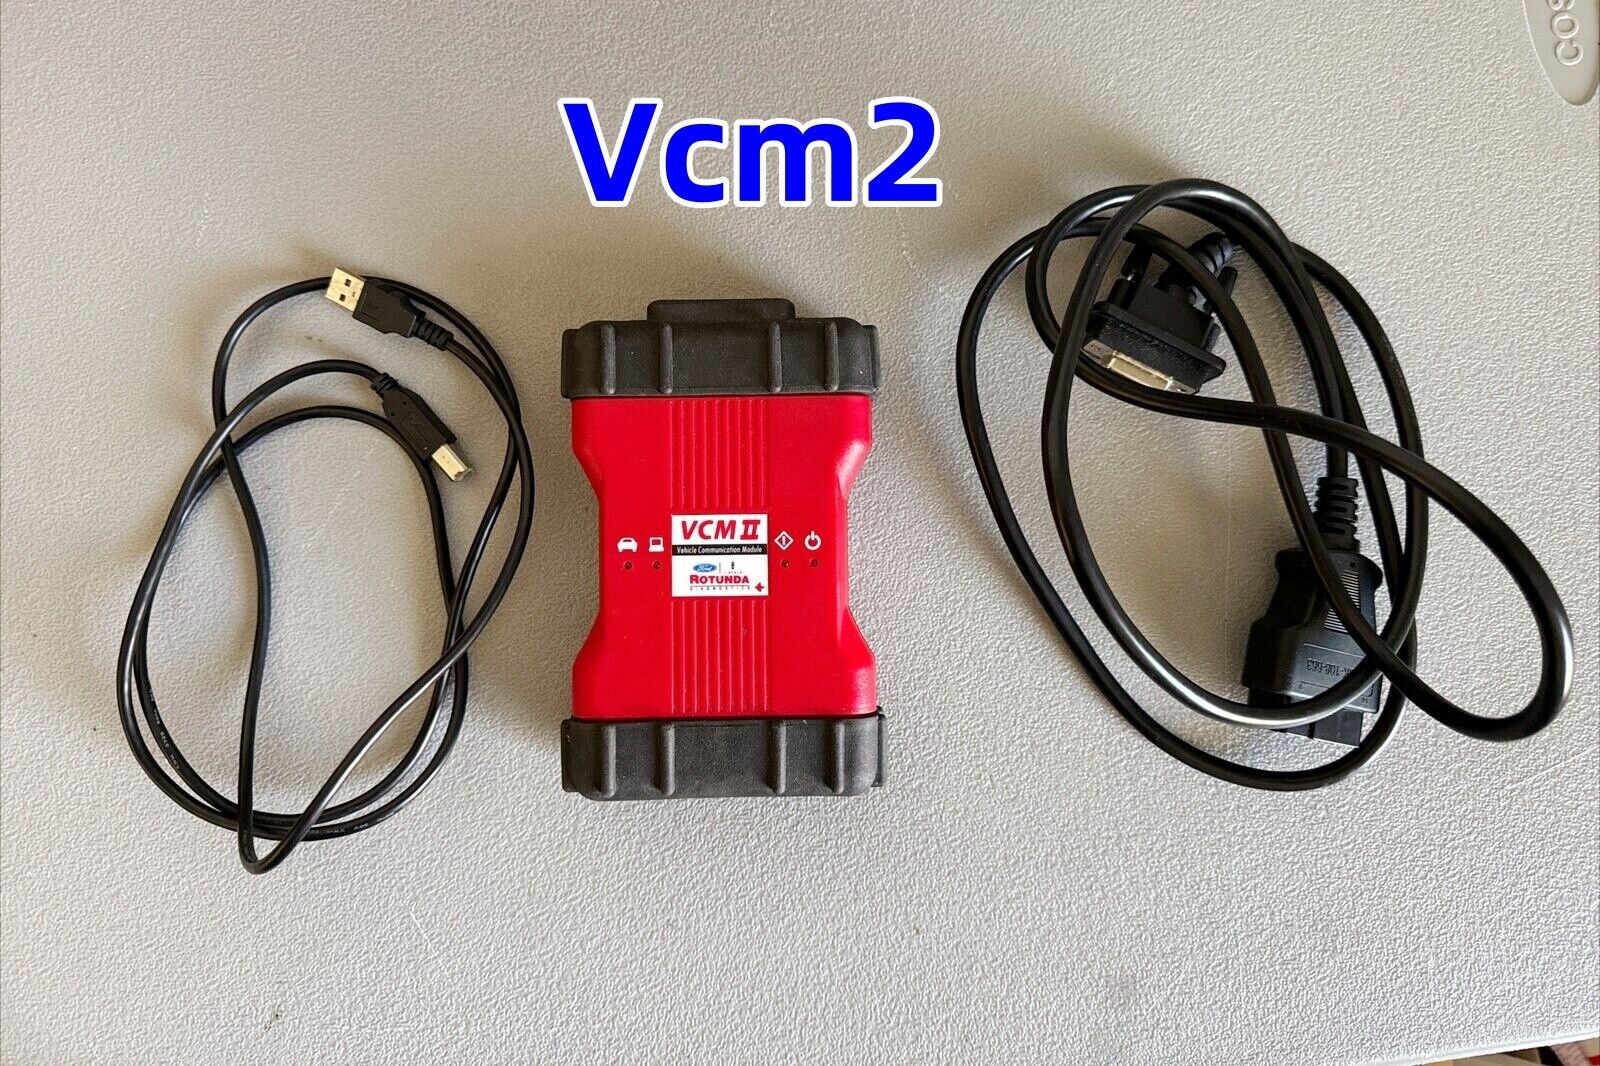 New Vcm2 Diagnostic Scanner Fits For Ford & For Mazda Vcm Ii Ids Vehicle Tester